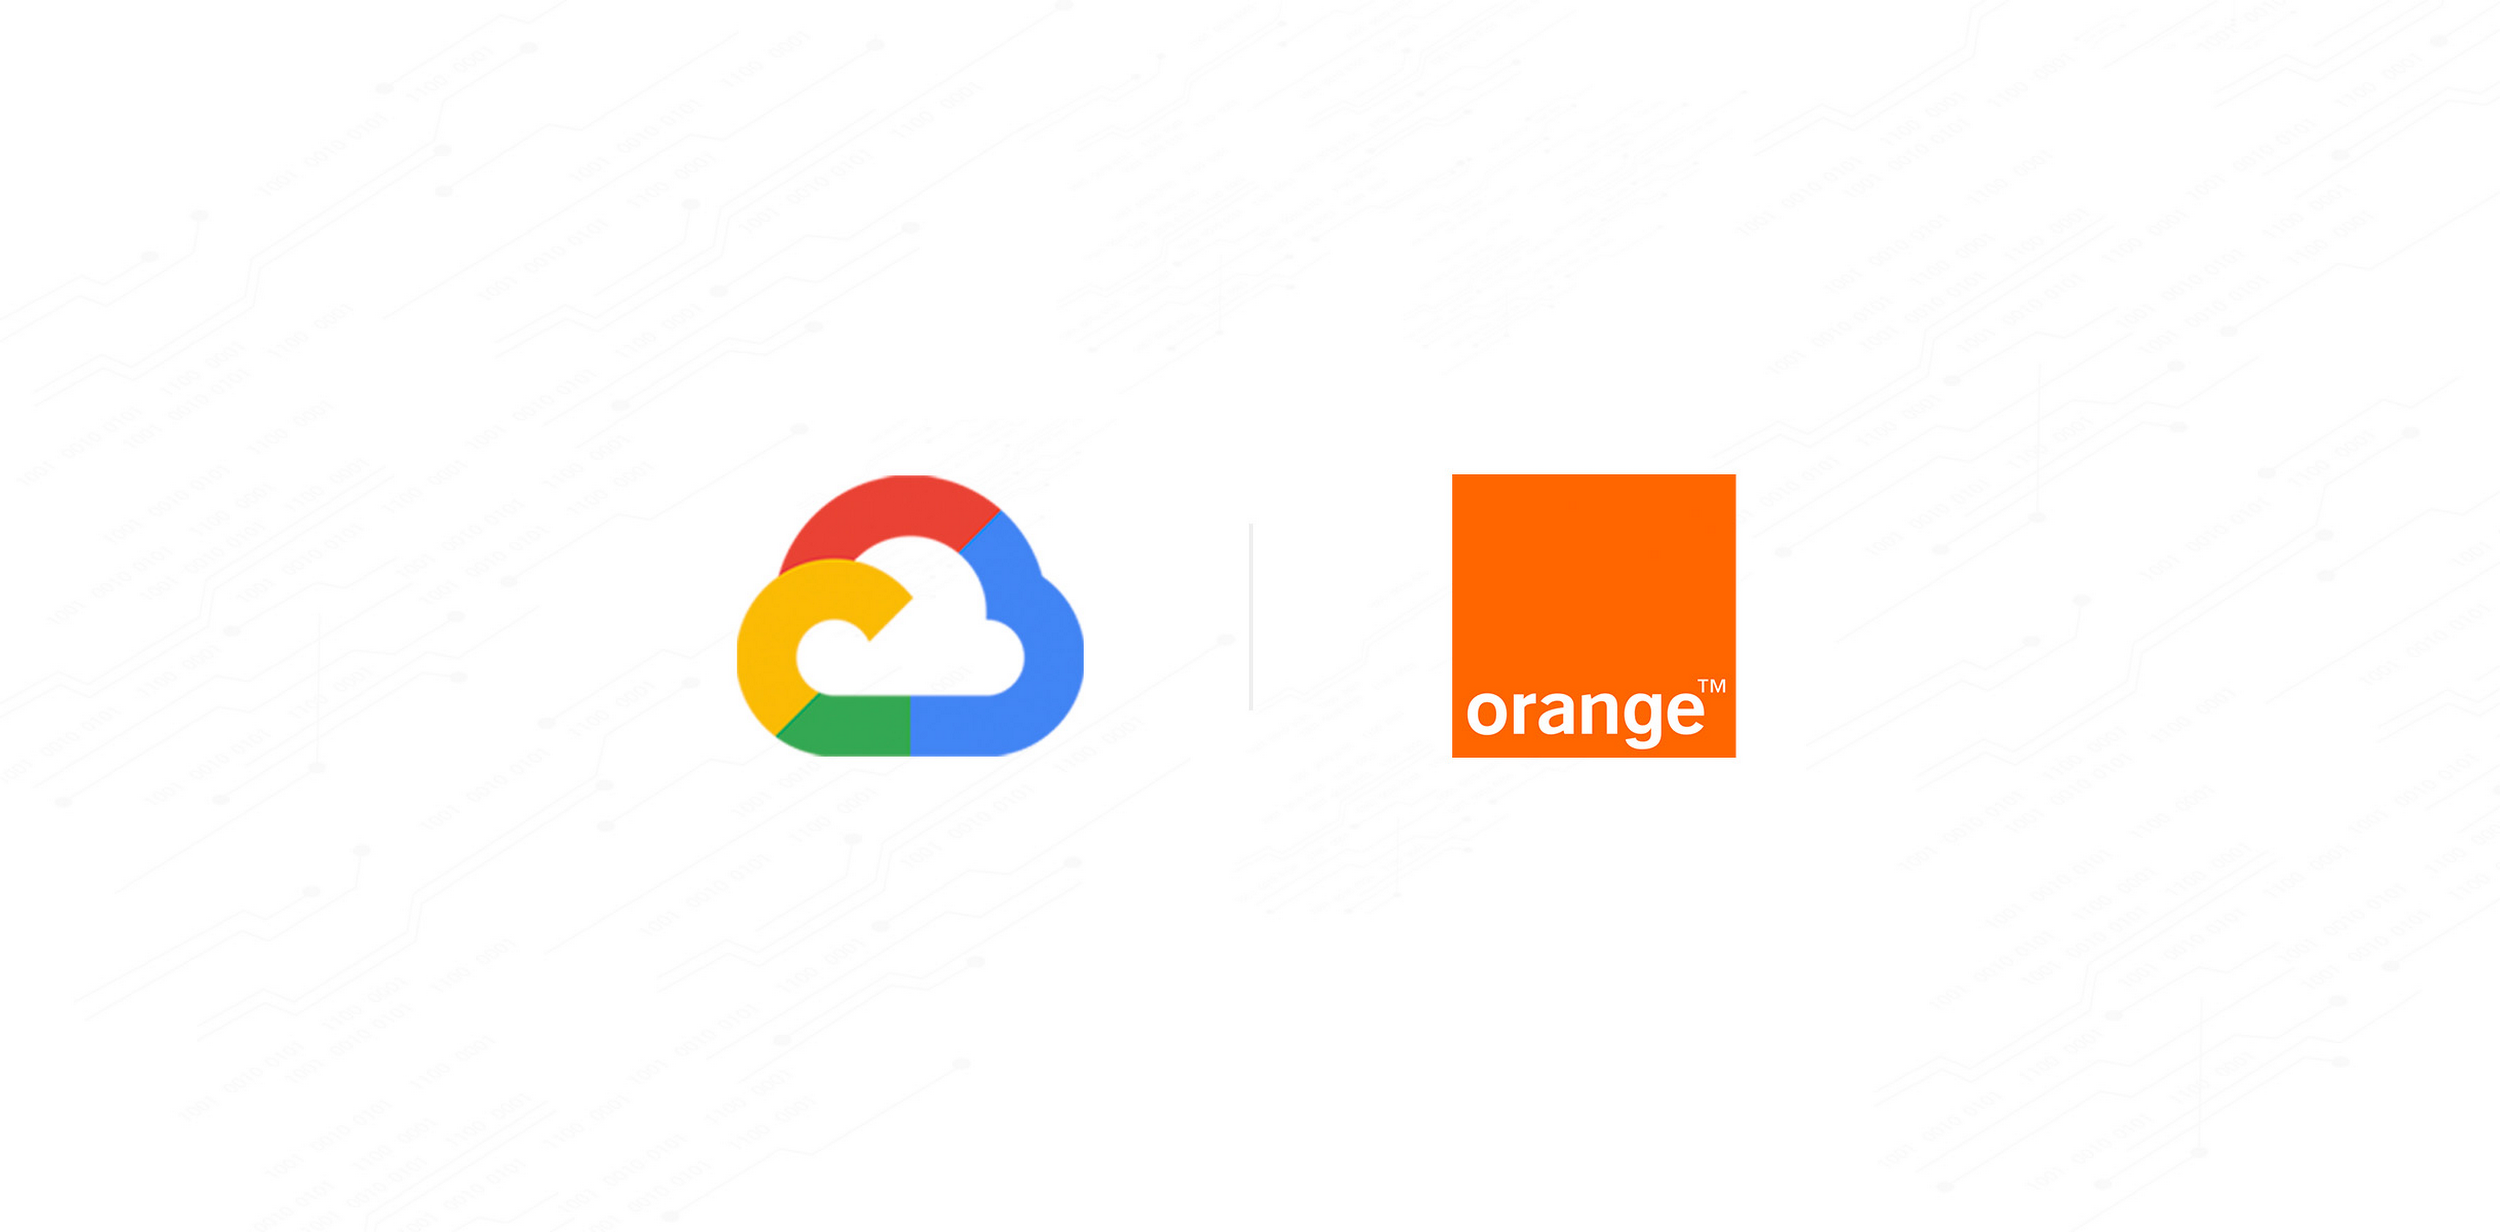 https://storage.googleapis.com/gweb-cloudblog-publish/images/google_cloud_x_orange.max-2500x2500.jpg